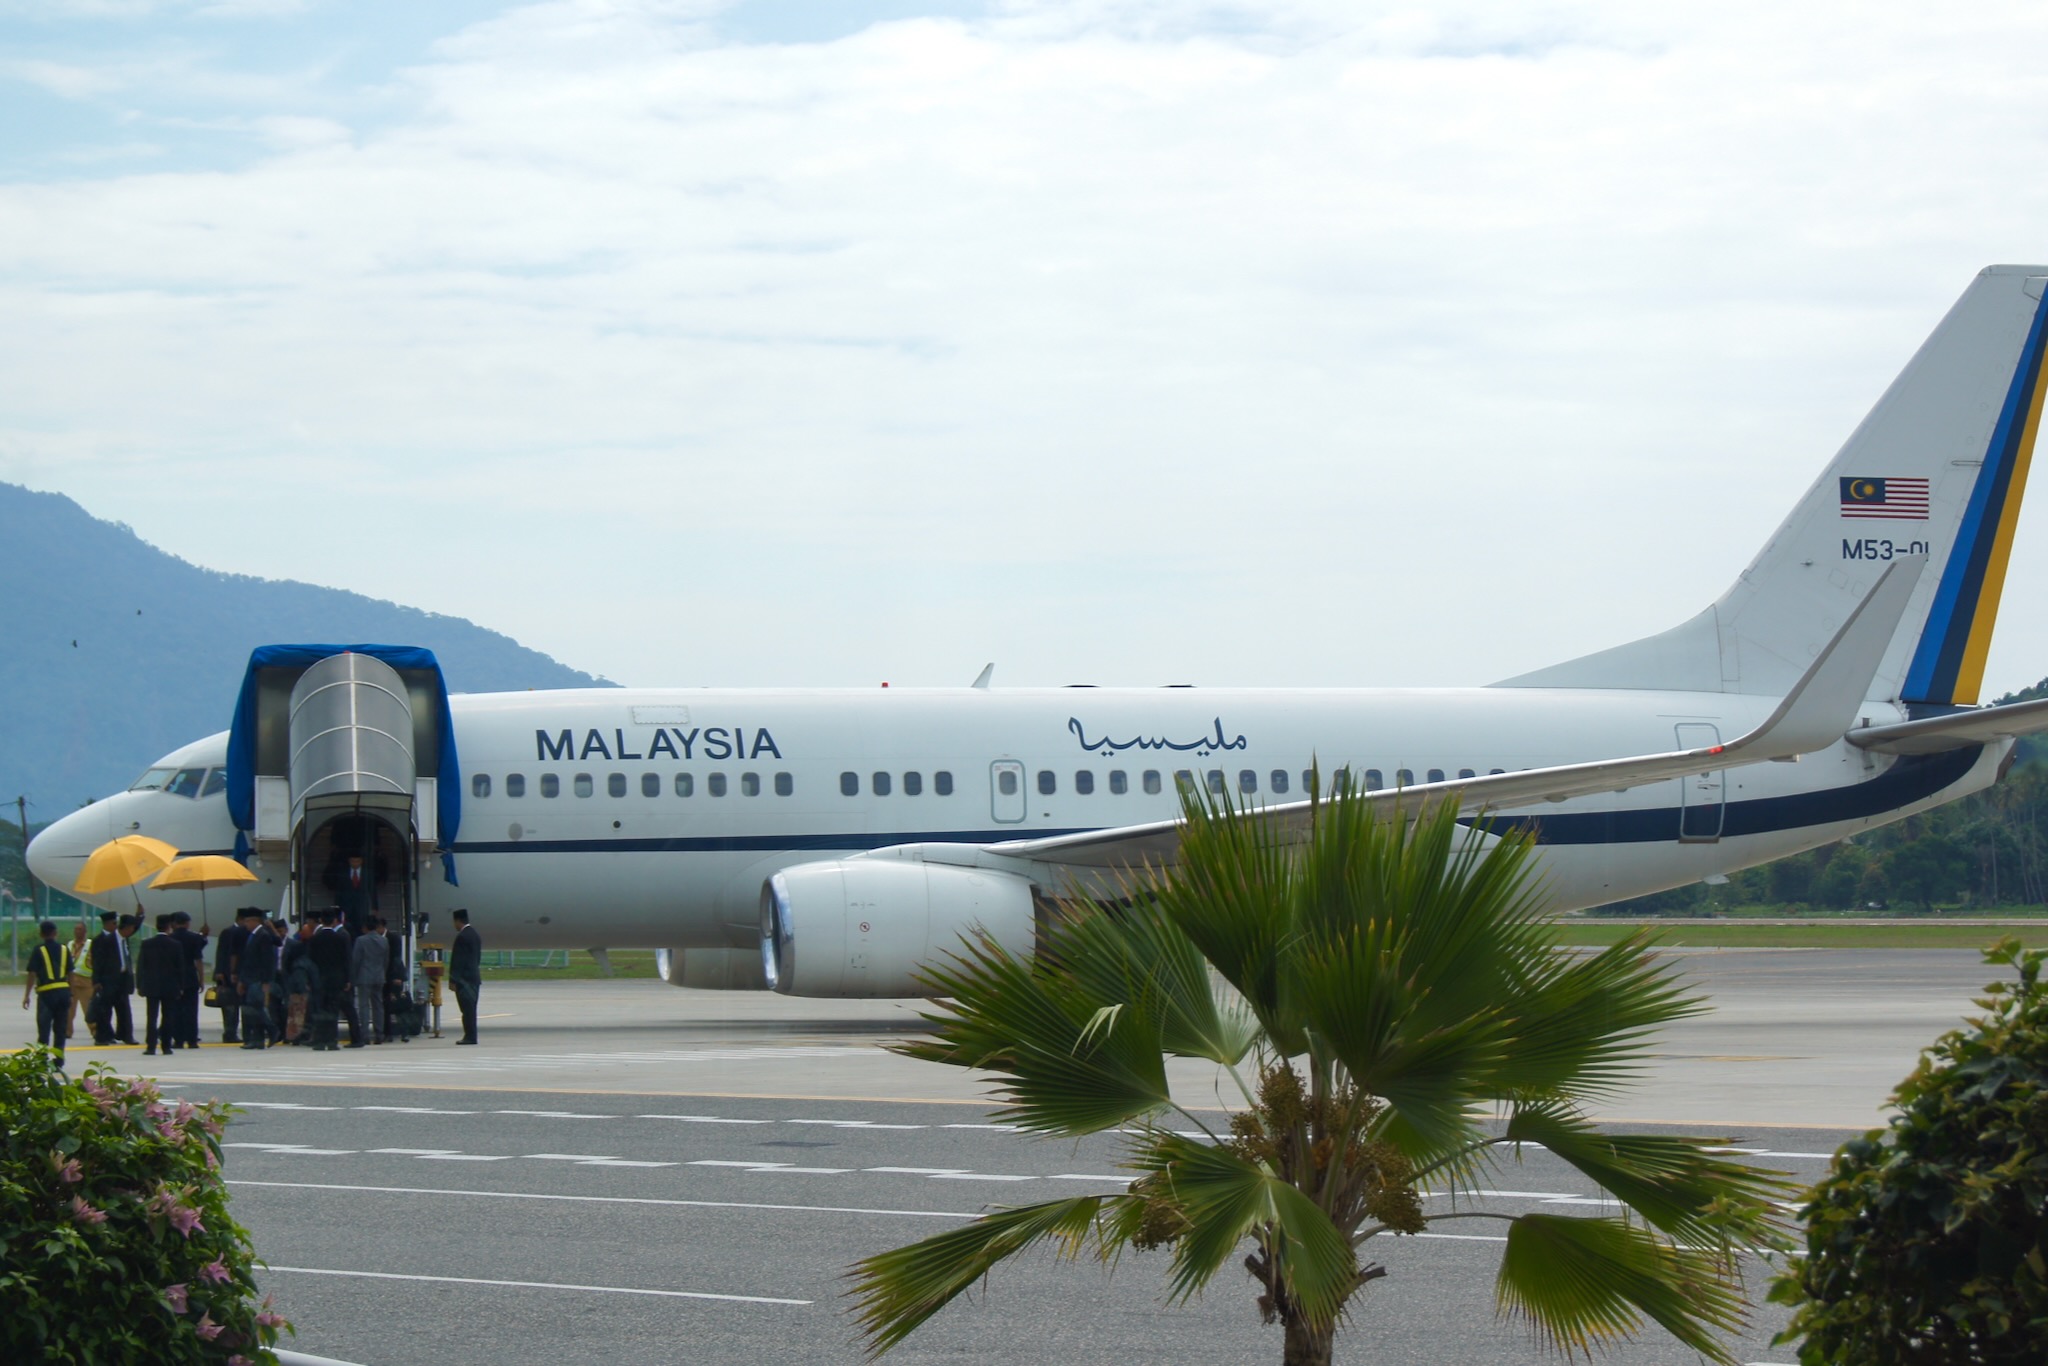 Royal Malaysian Air Force Boeing 737-700 - MSN 29274 - M53-01